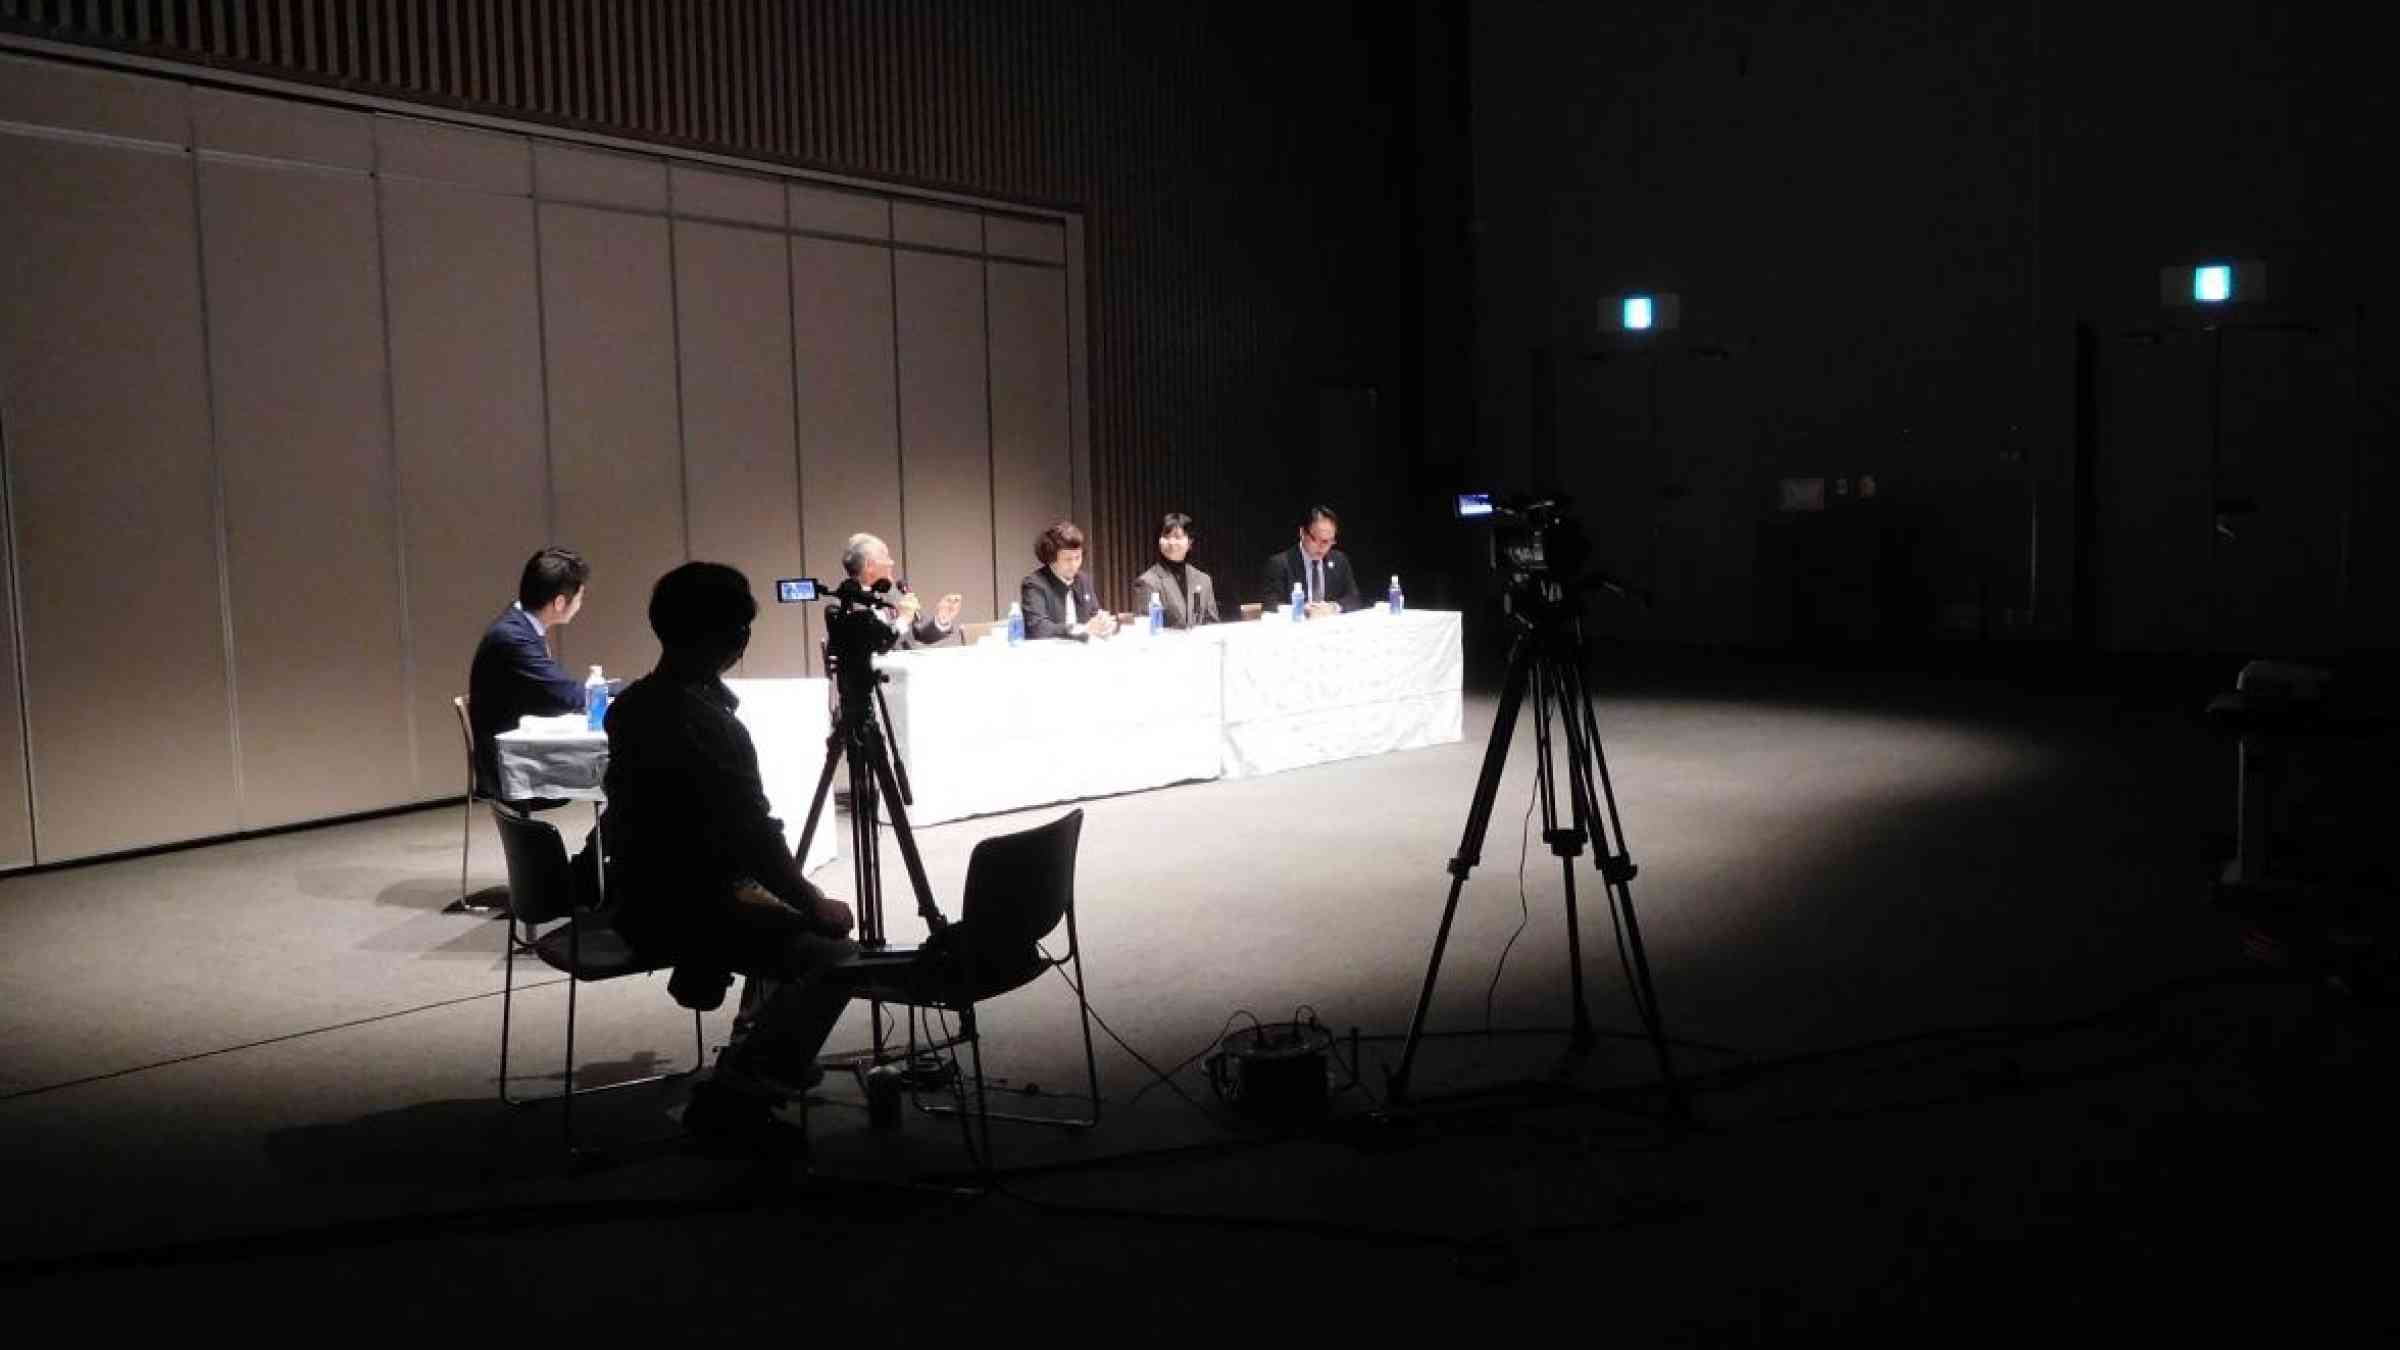 2020 Sendai Symposium for Disaster Risk Reduction and the Future, Sendai, Japan